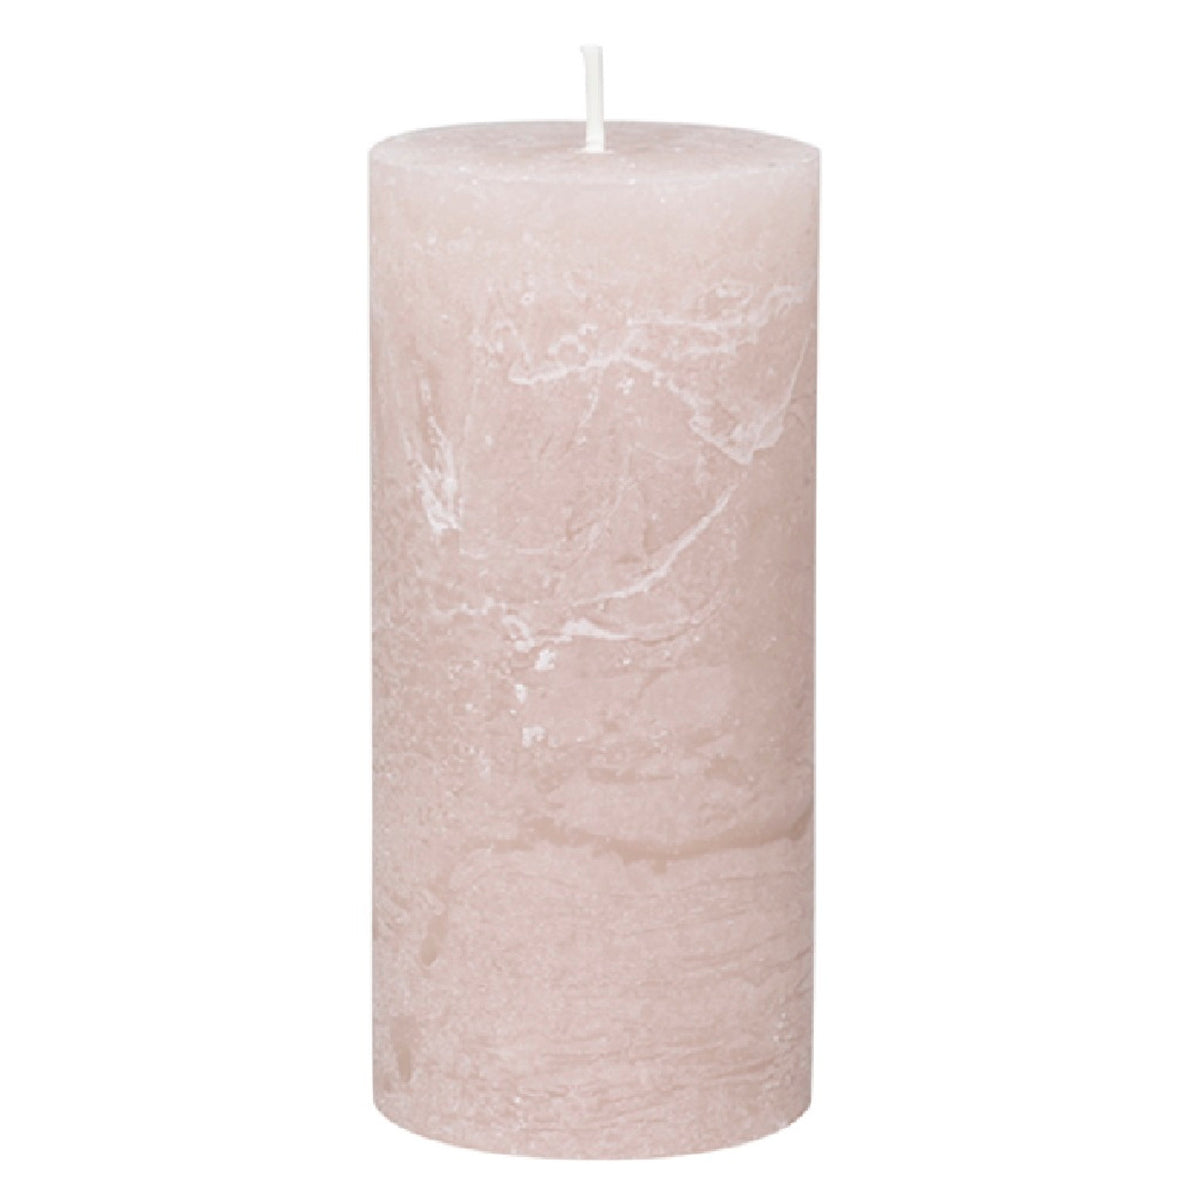 Macon Rustic Pillar Candle - Dusty Rose - 60hrs - 15cm x 7cm